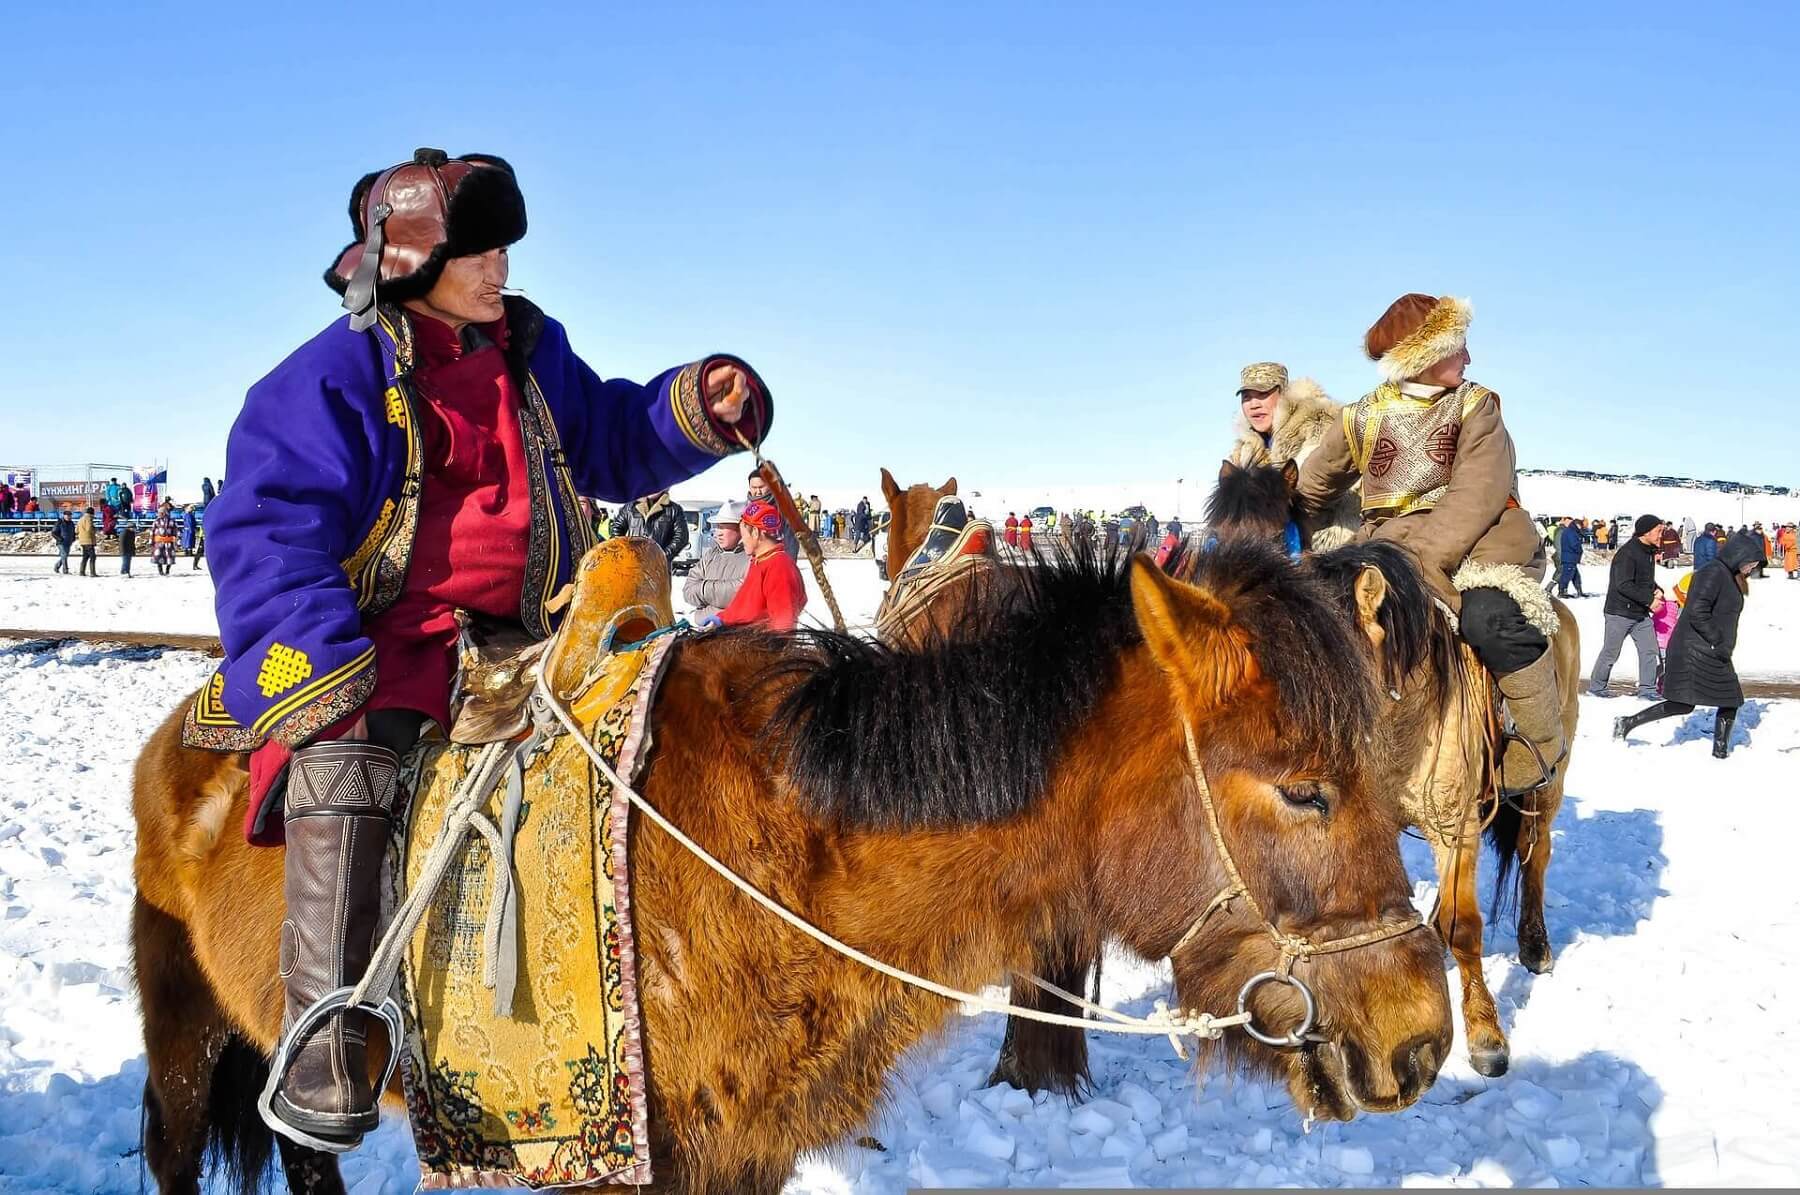 mongolian man riding a horse in winter